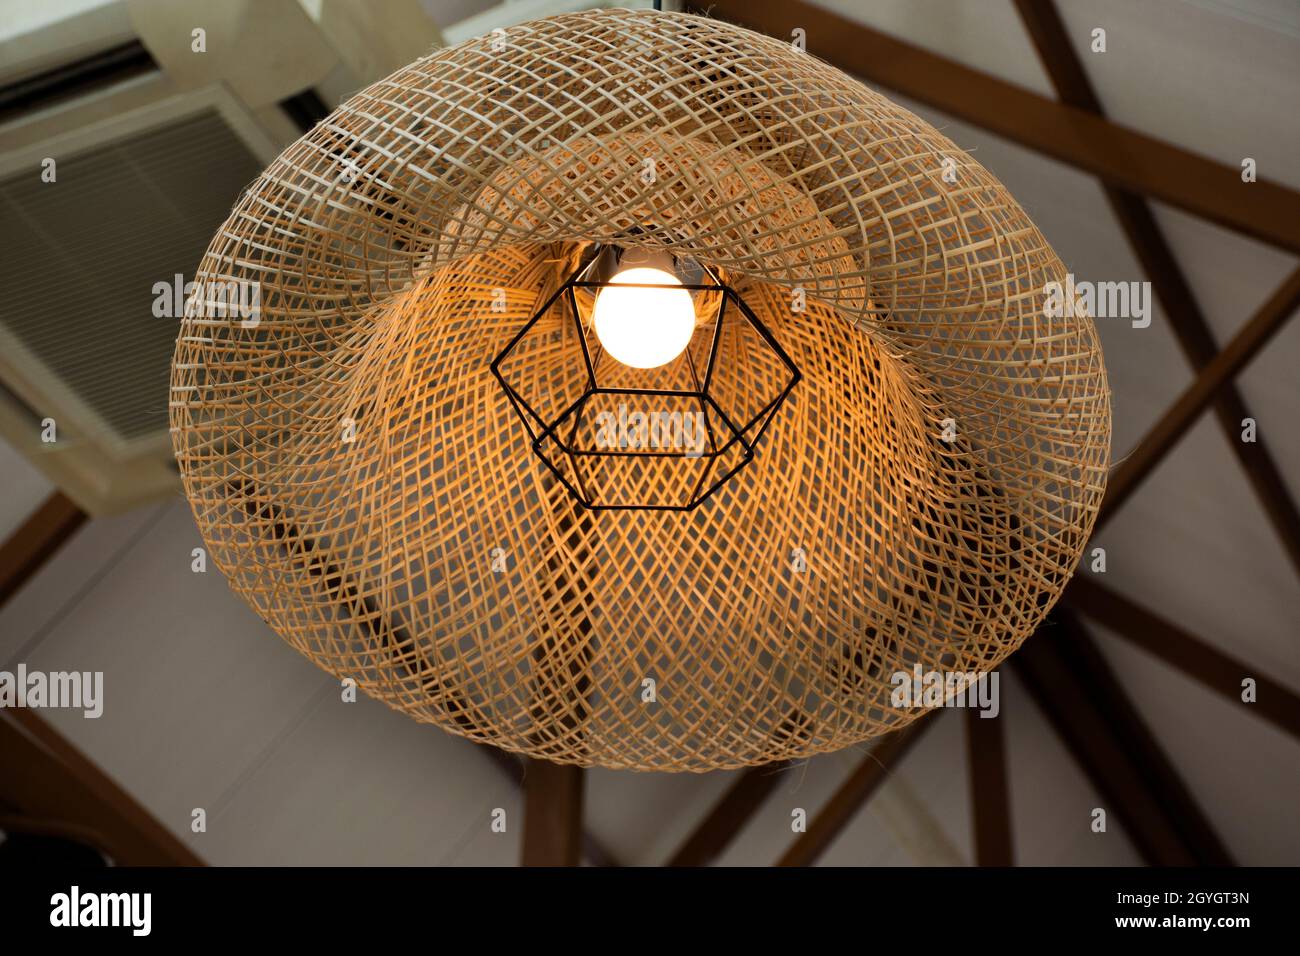 Precios asequibles Seguro de calidad OSALADI Lámpara de Techo Tejida de  Mimbre de Bambú Lámpara Colgante de Mimbre para Bar Café Sala de Estar Sala  de Té Nuevas modas han llegado 